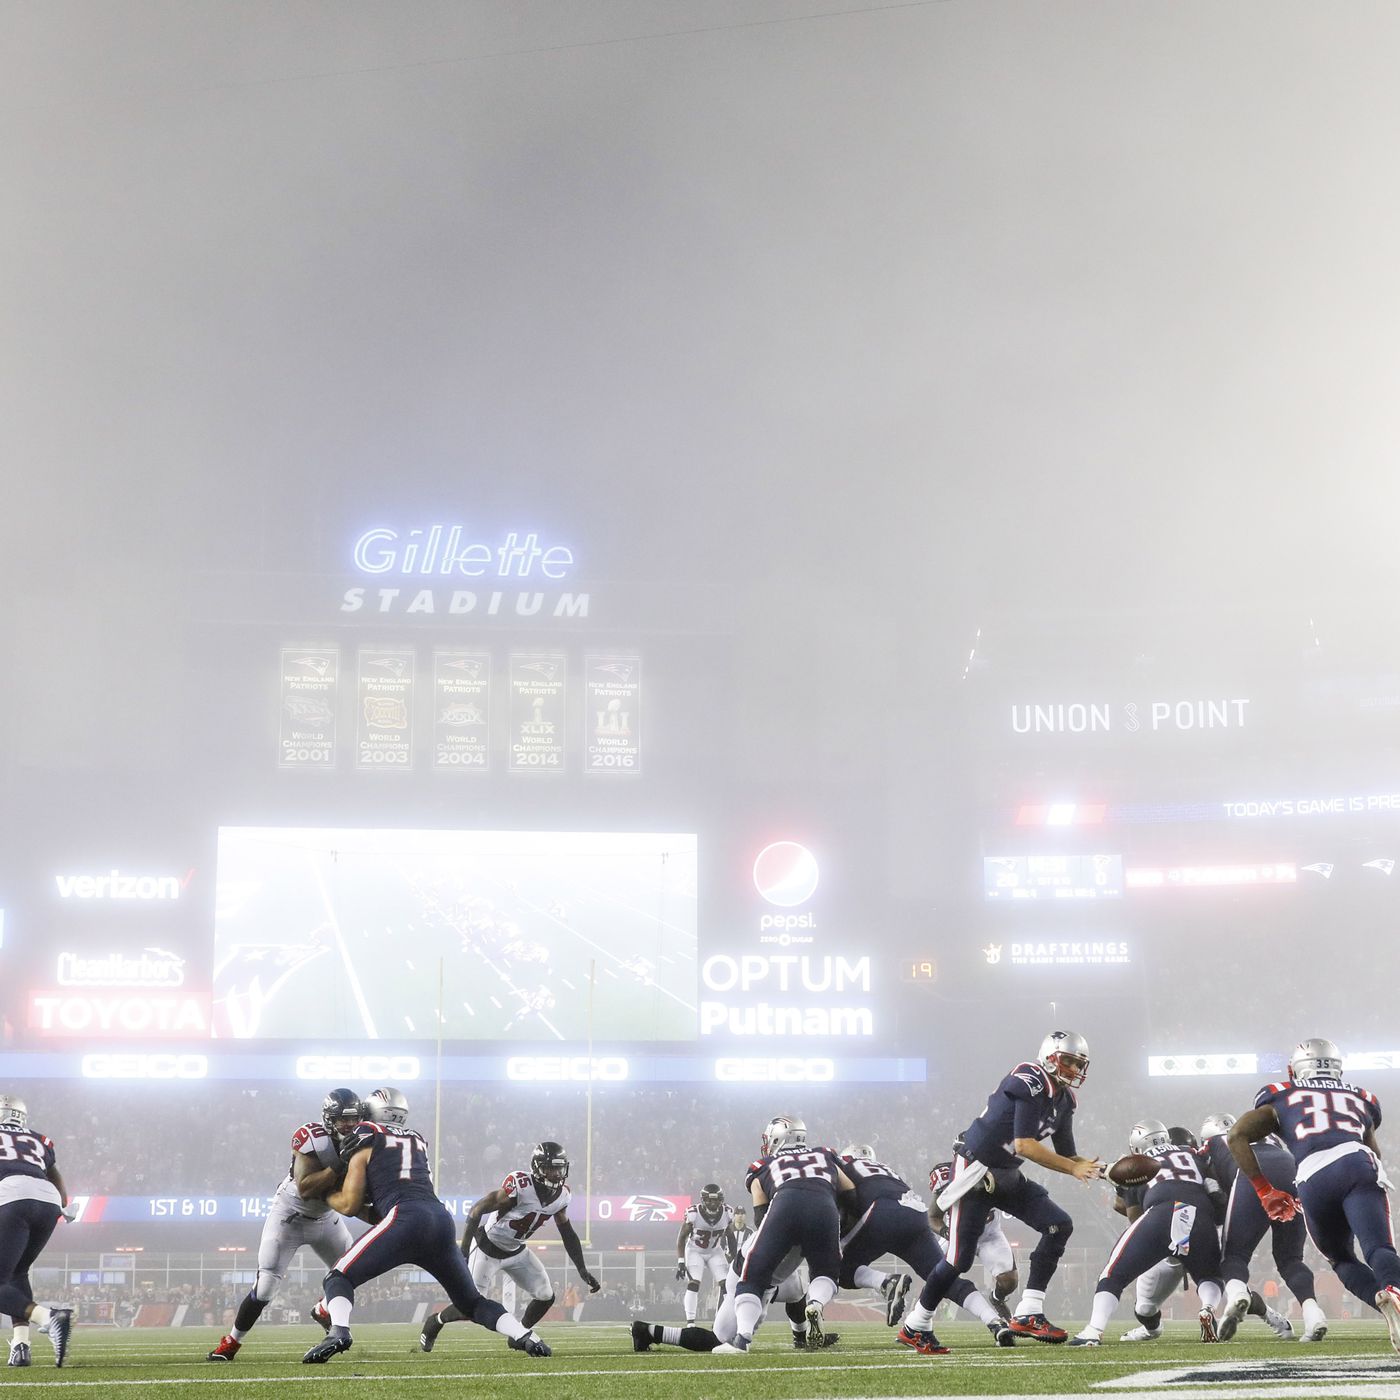 NFL Week 14 Fantasy Football Recap: New England Patriots vs